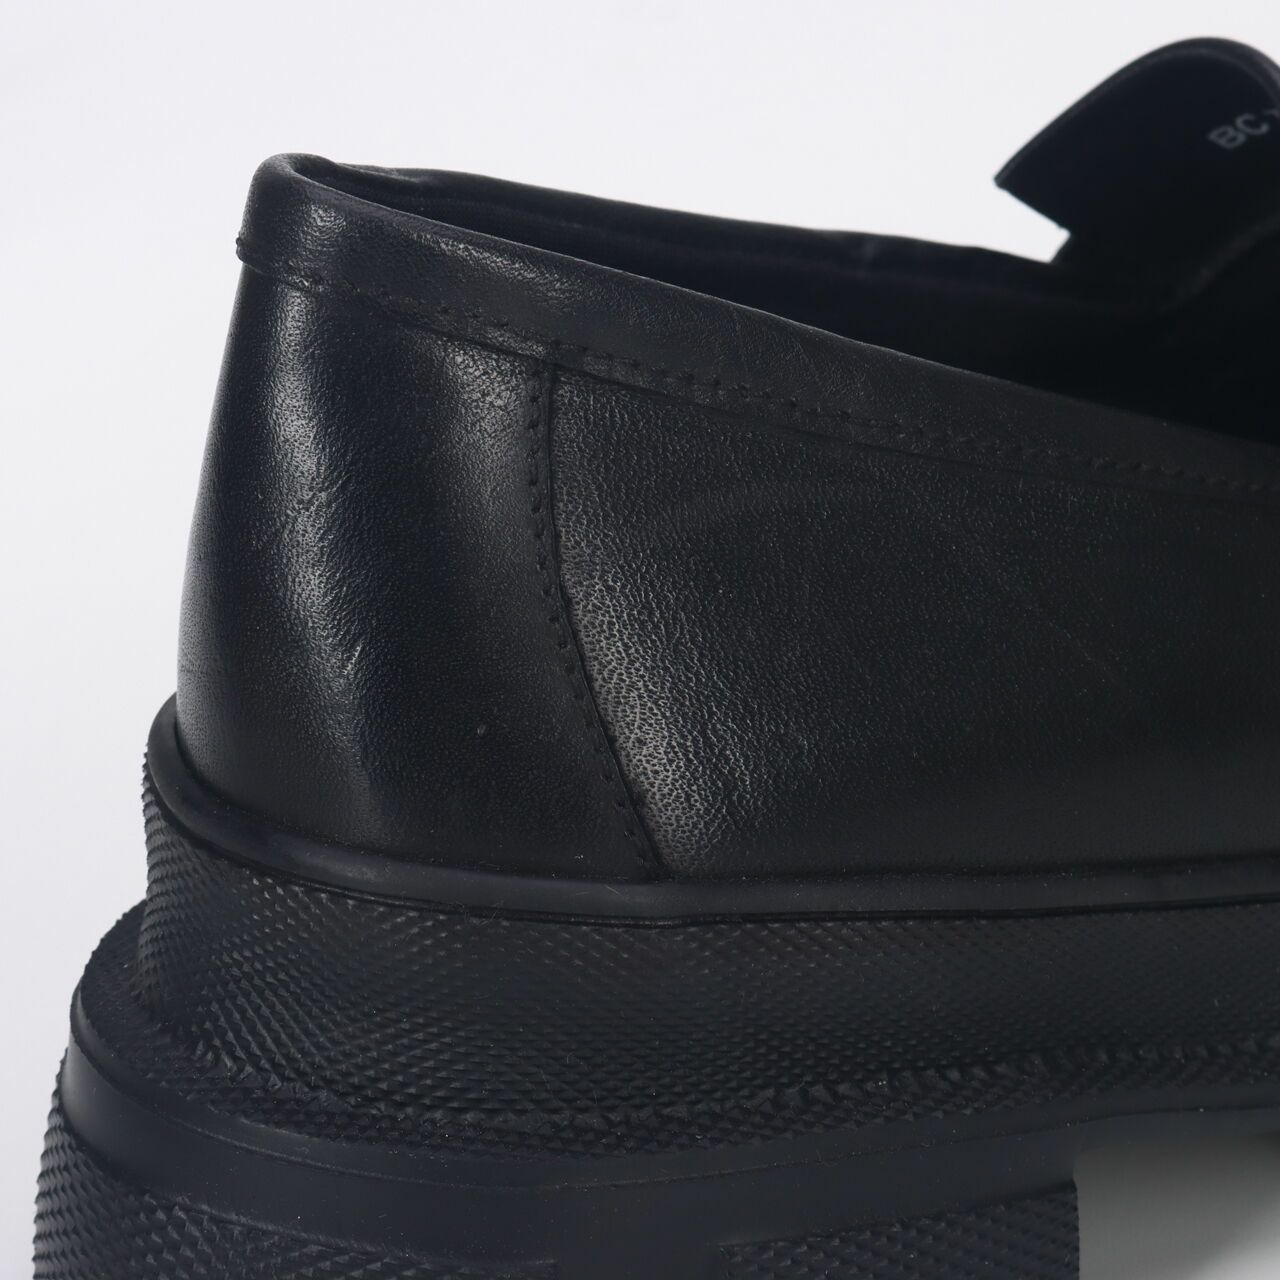 Nappa Milano Black Loafers